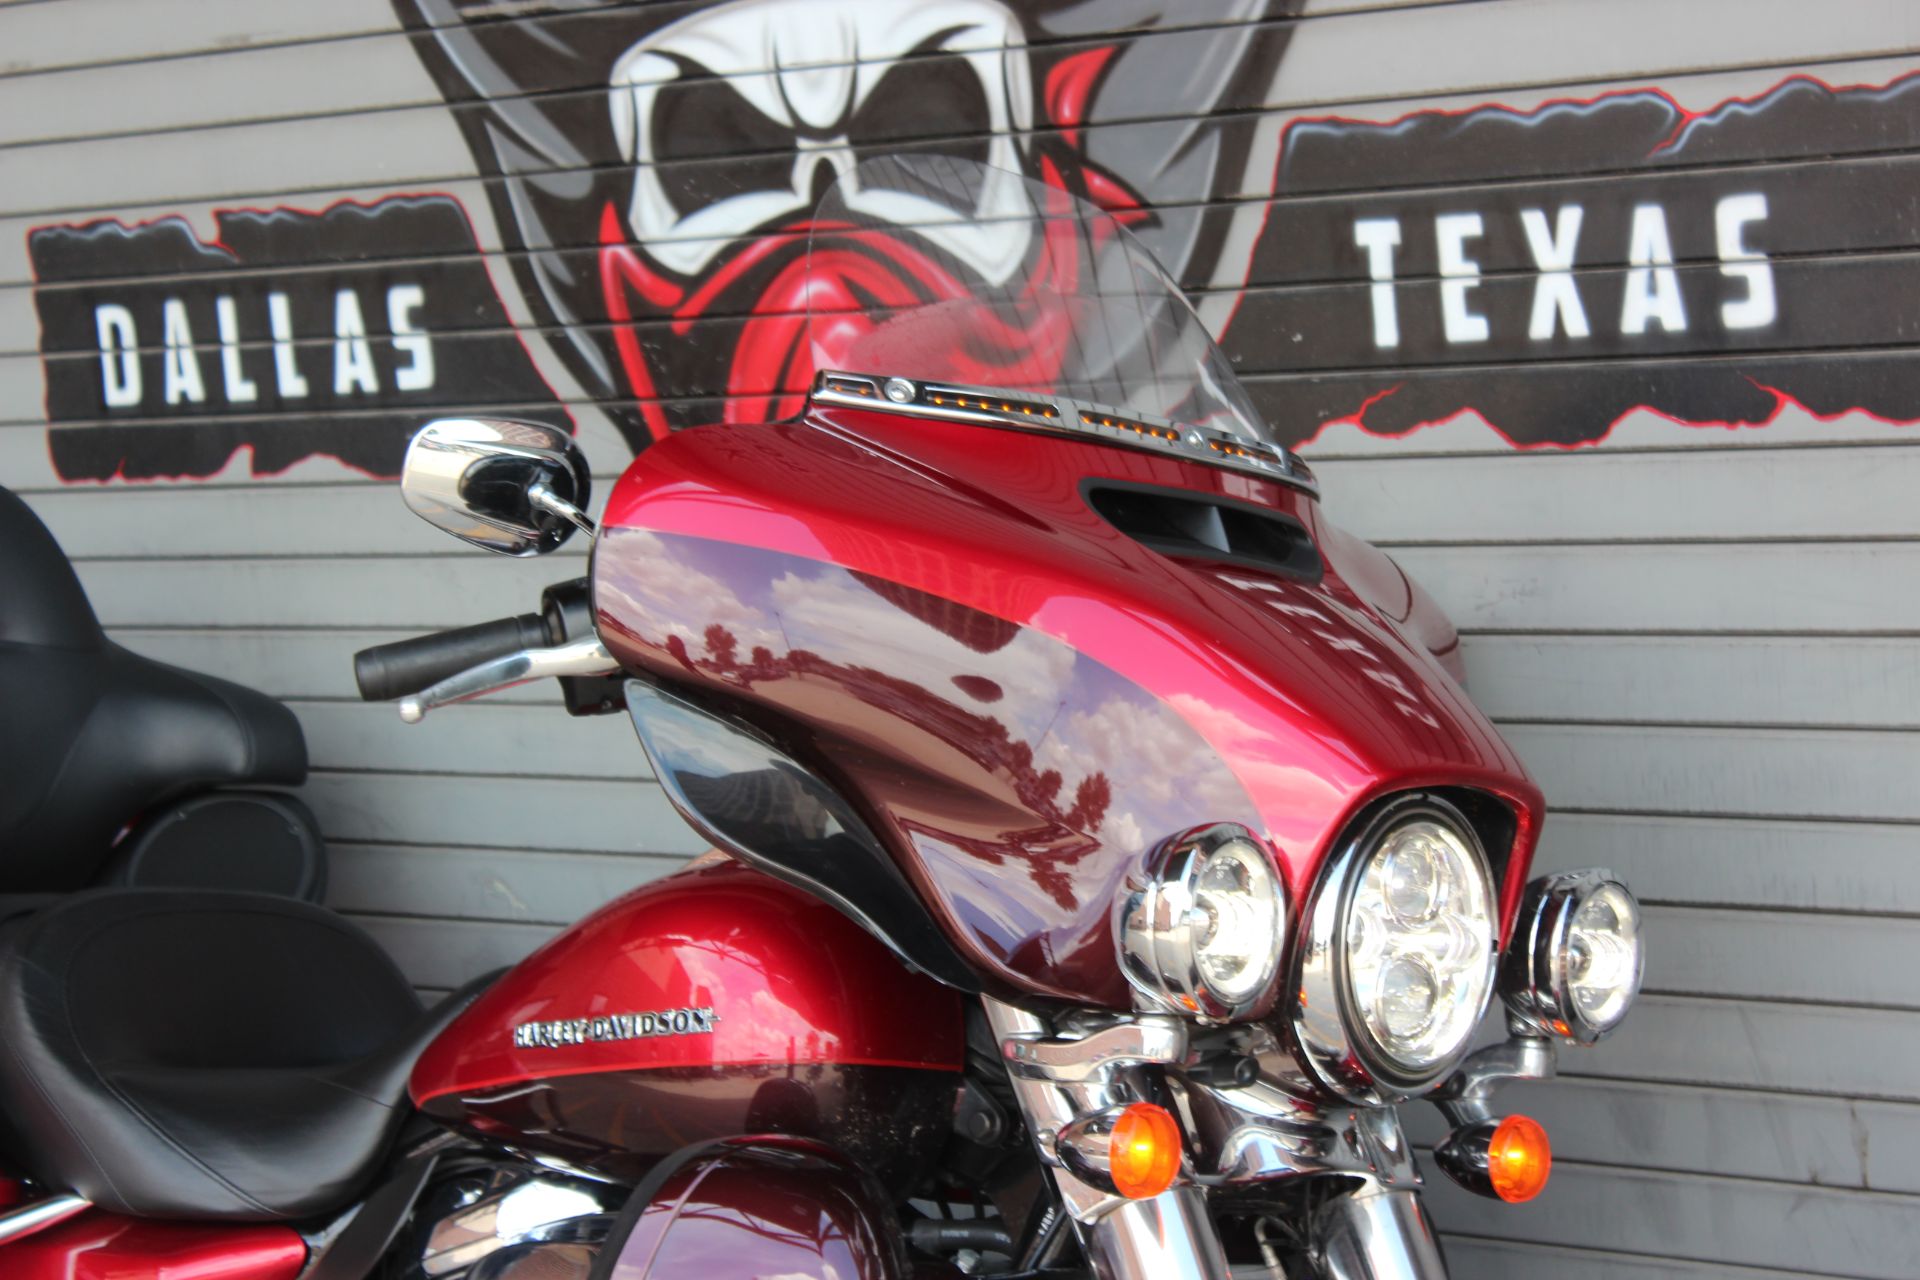 2019 Harley-Davidson Ultra Limited in Carrollton, Texas - Photo 2